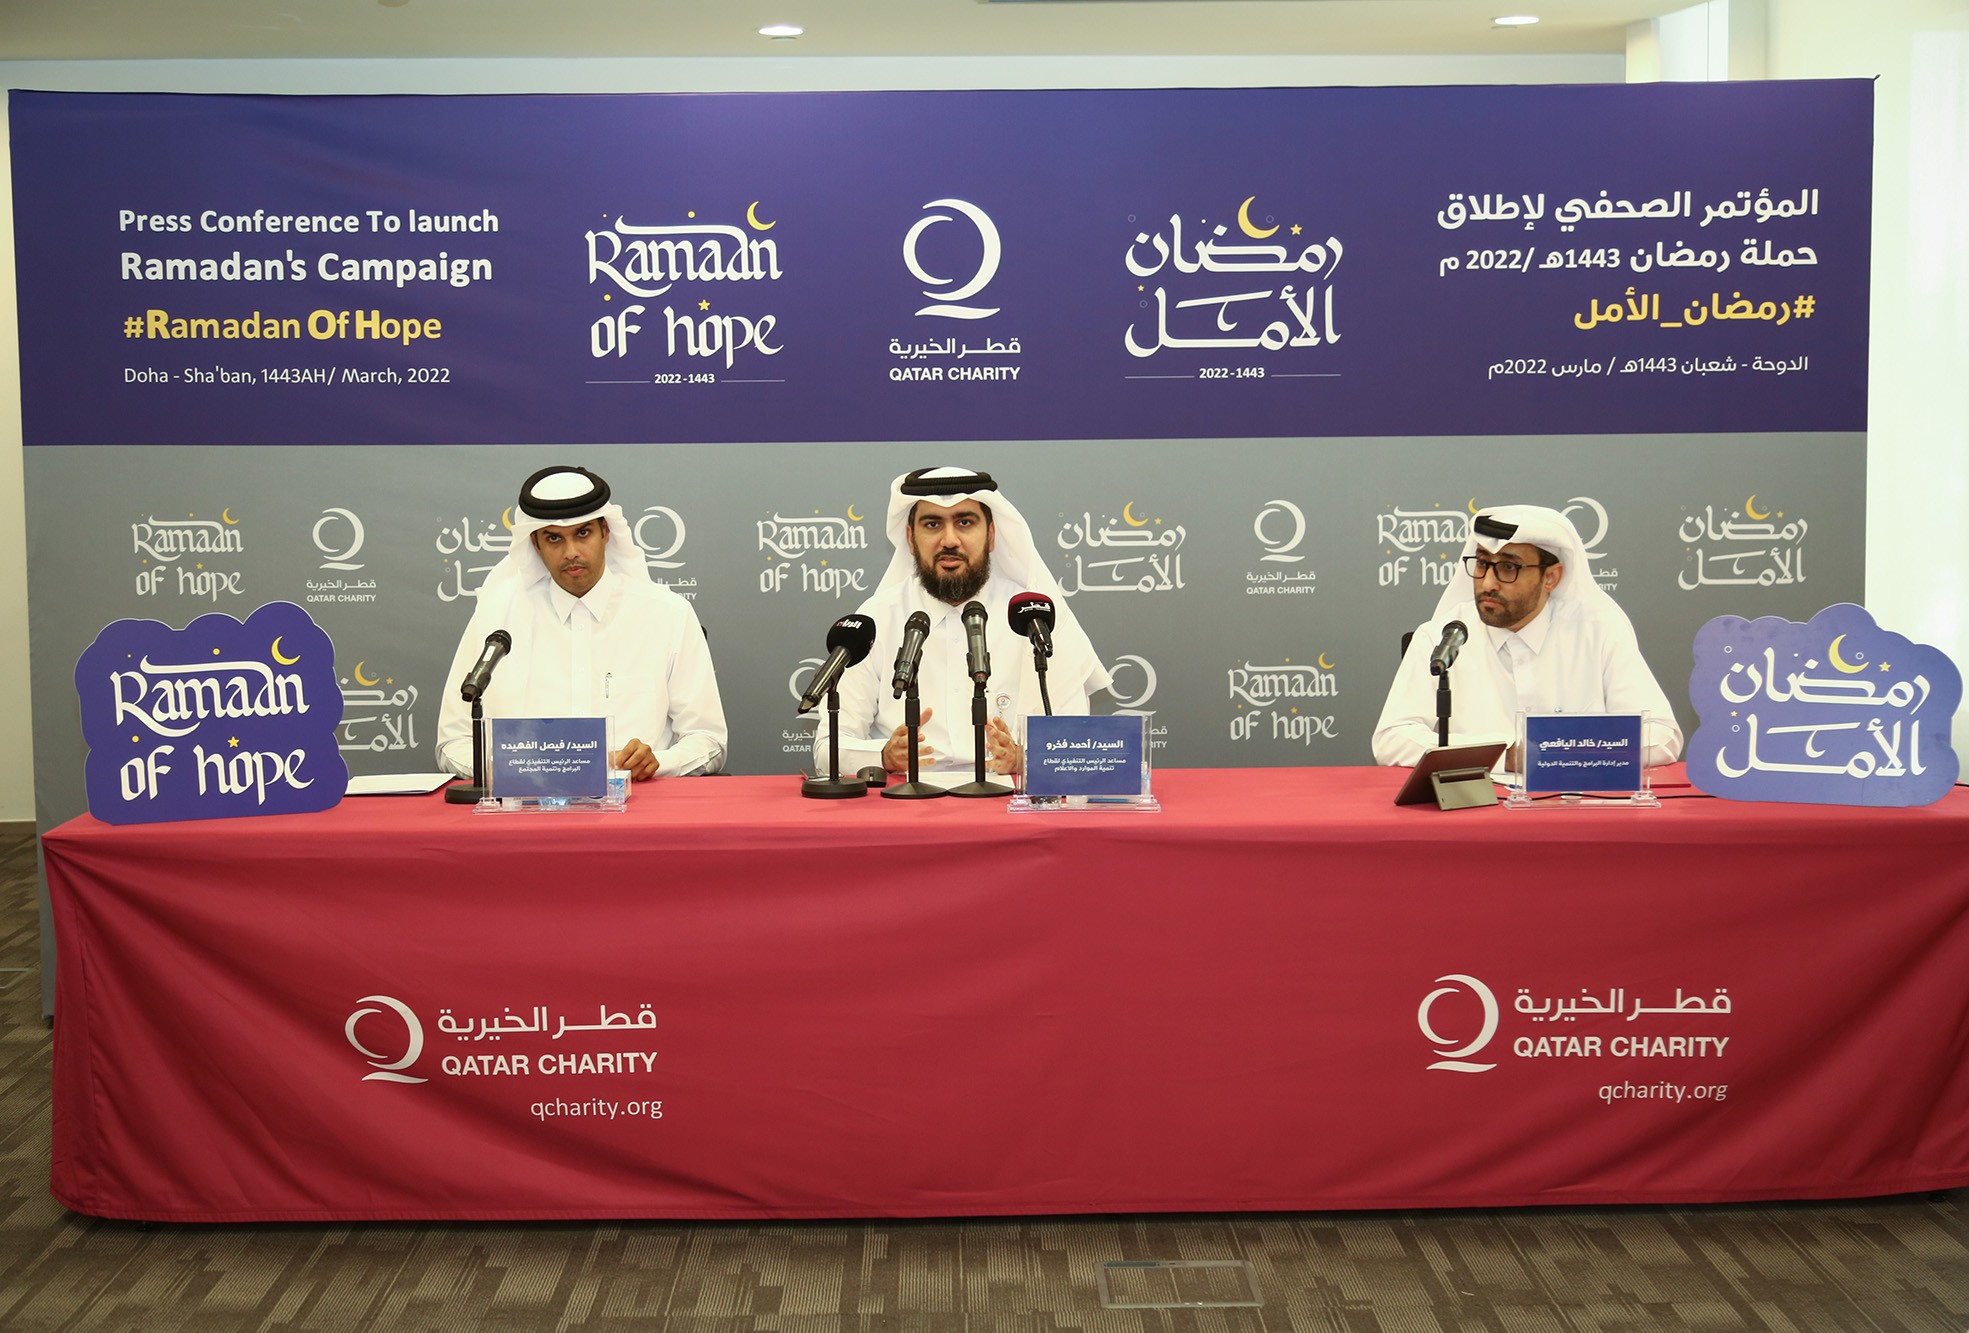 Qatar Charity Launches "Ramadan of Hope" Campaign